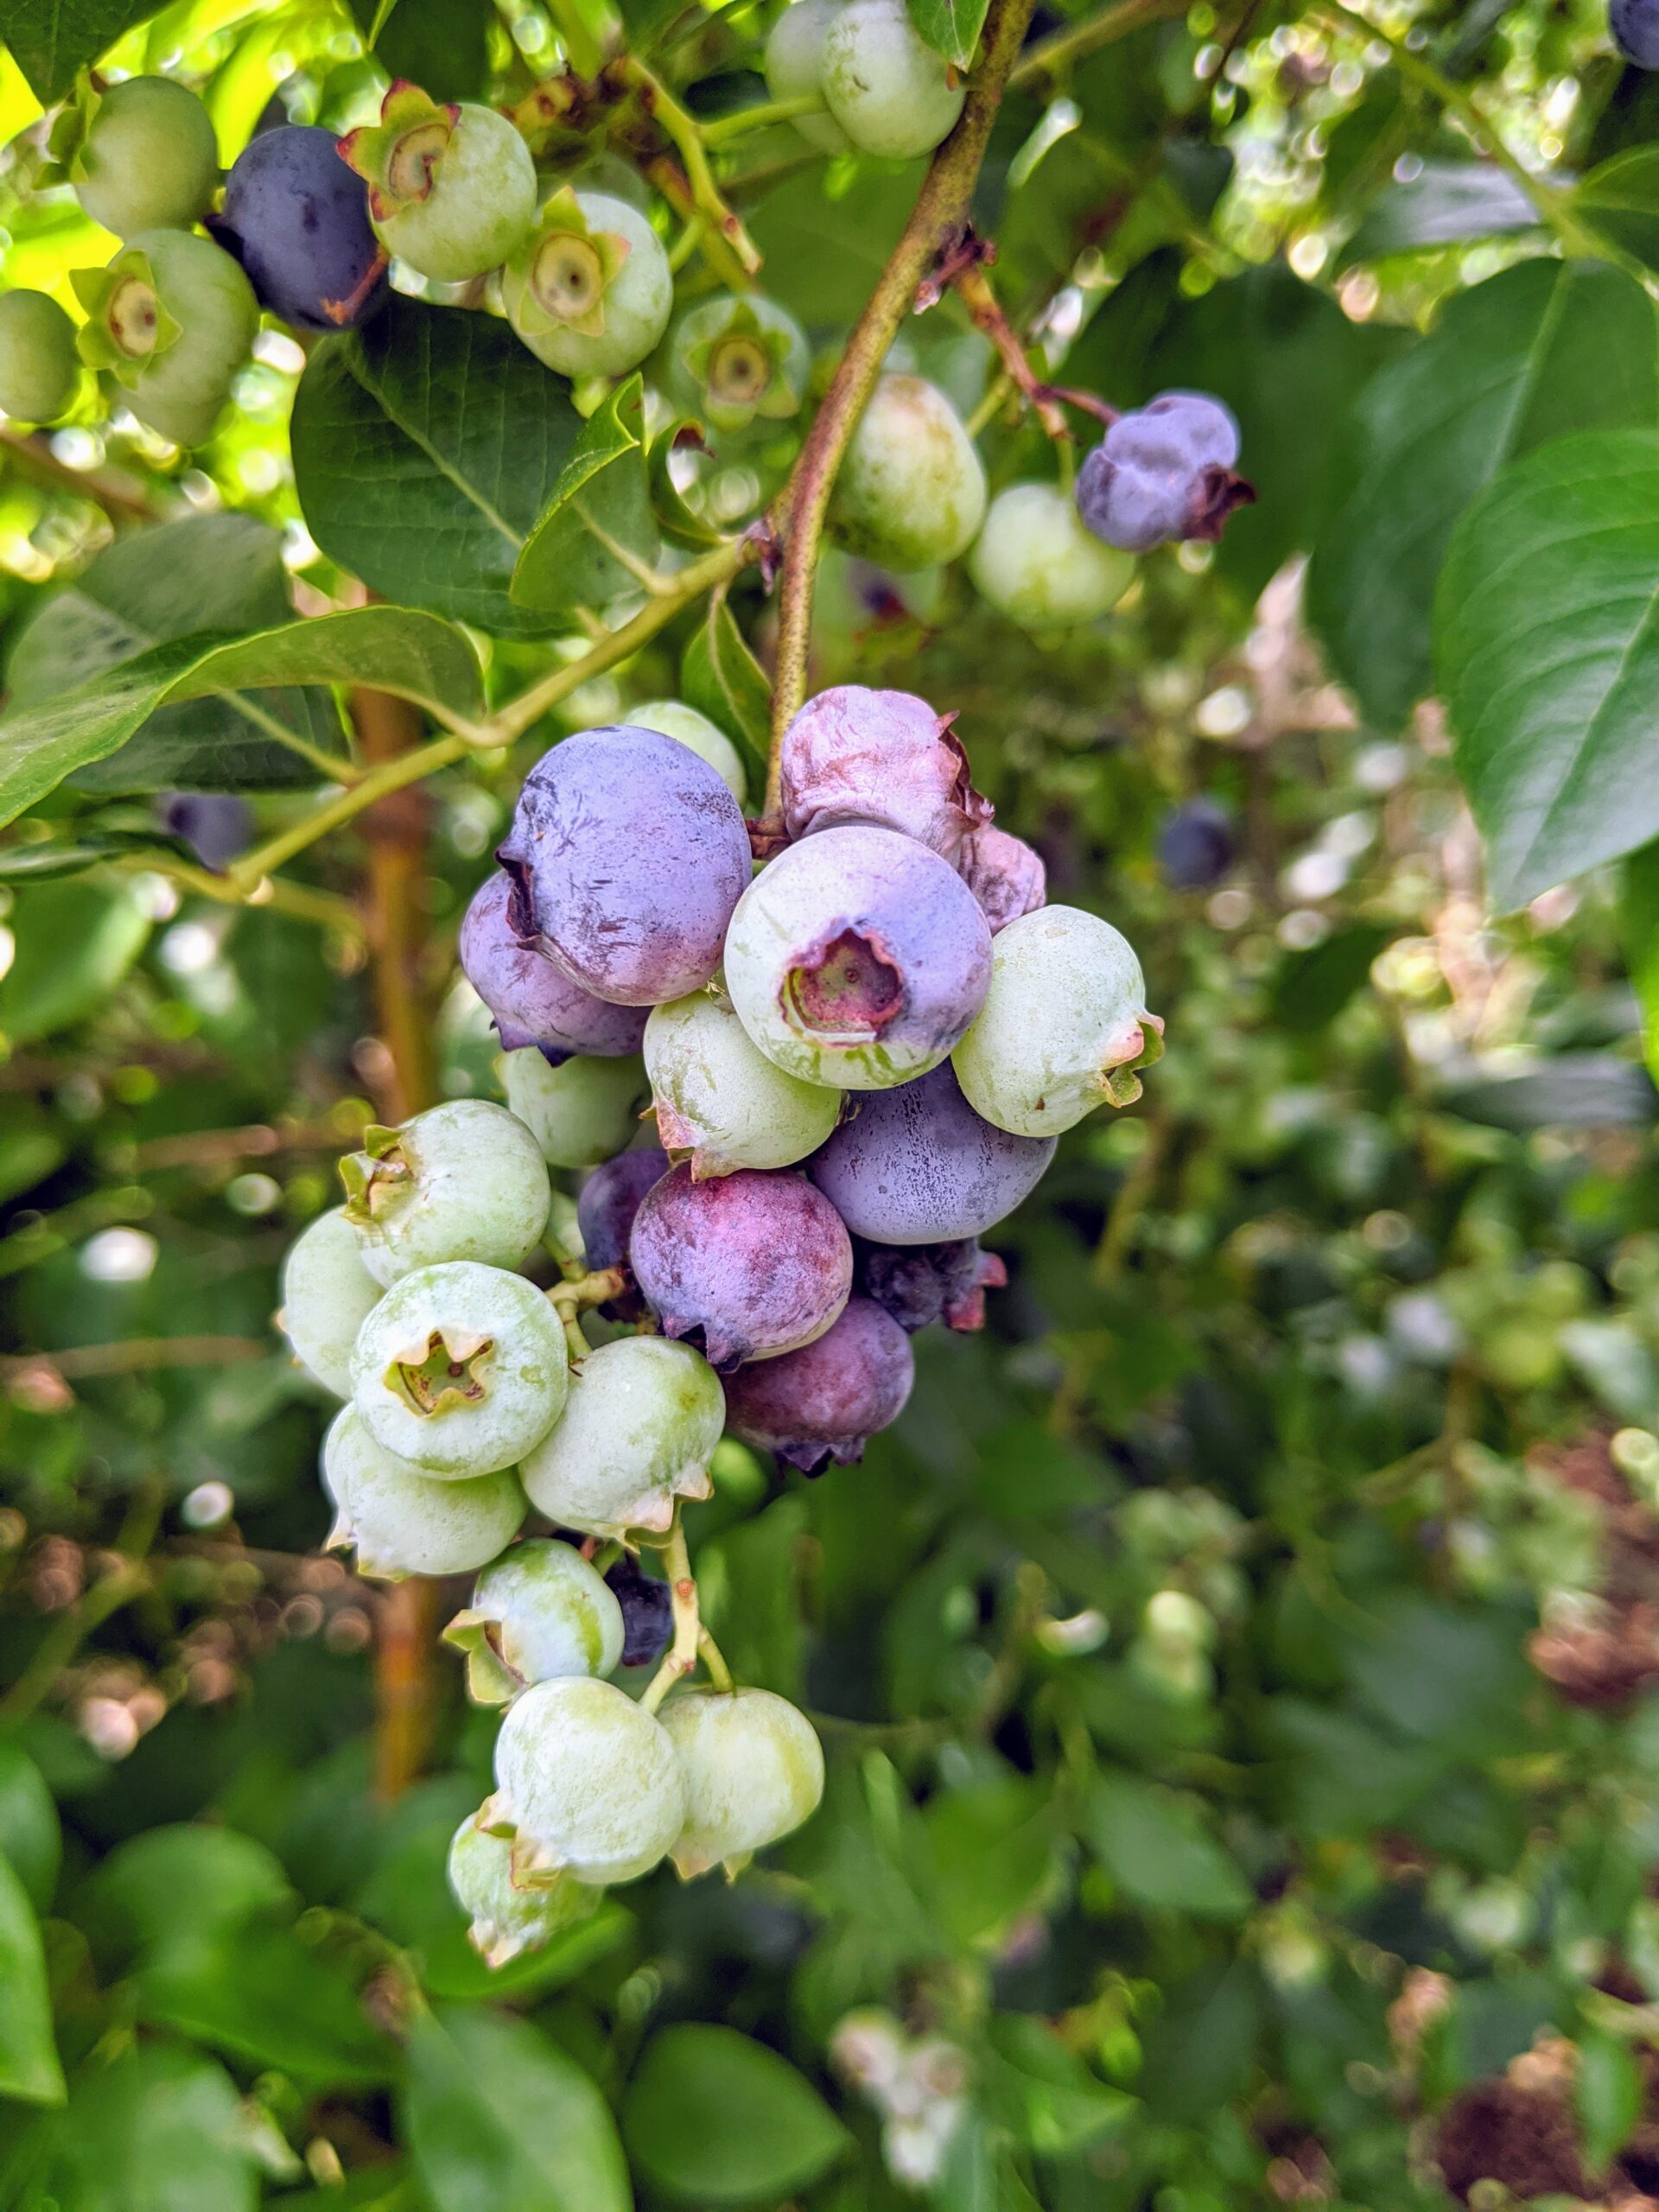 Picking Fresh Blueberries at My Farm - The Martha Stewart Blog